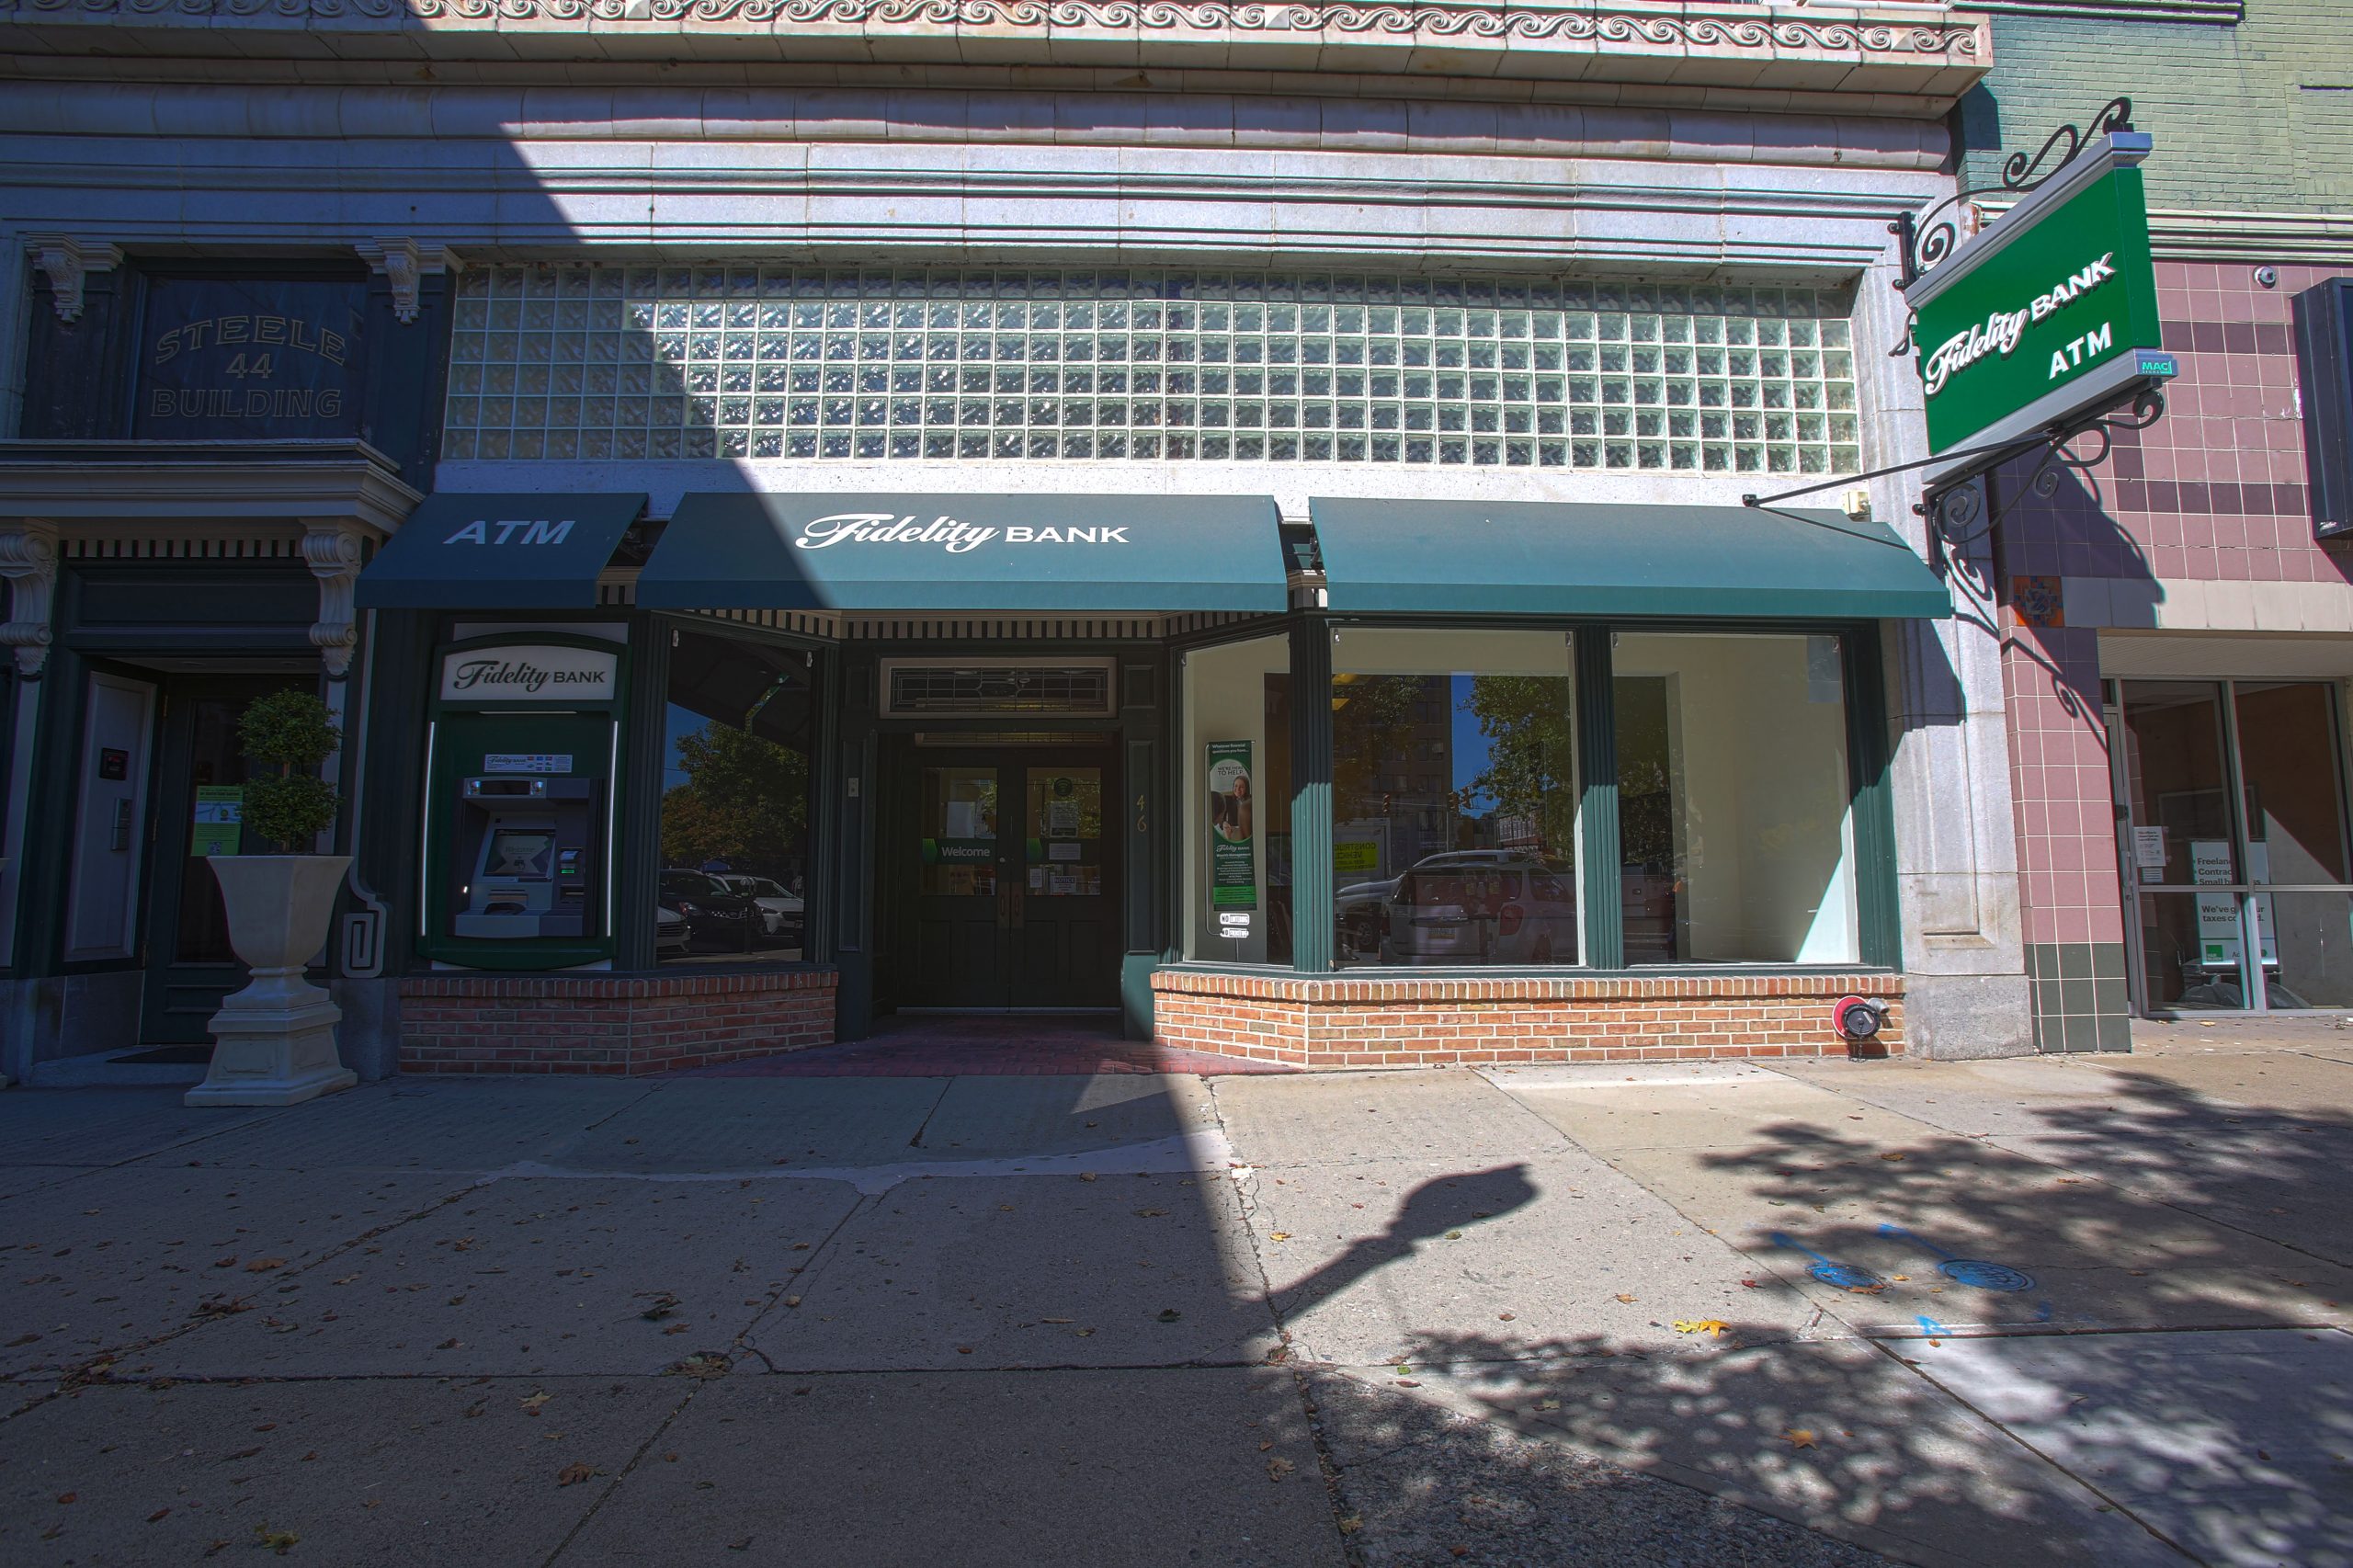 Visit Fidelity Bank's branch in Hazleton, PA.